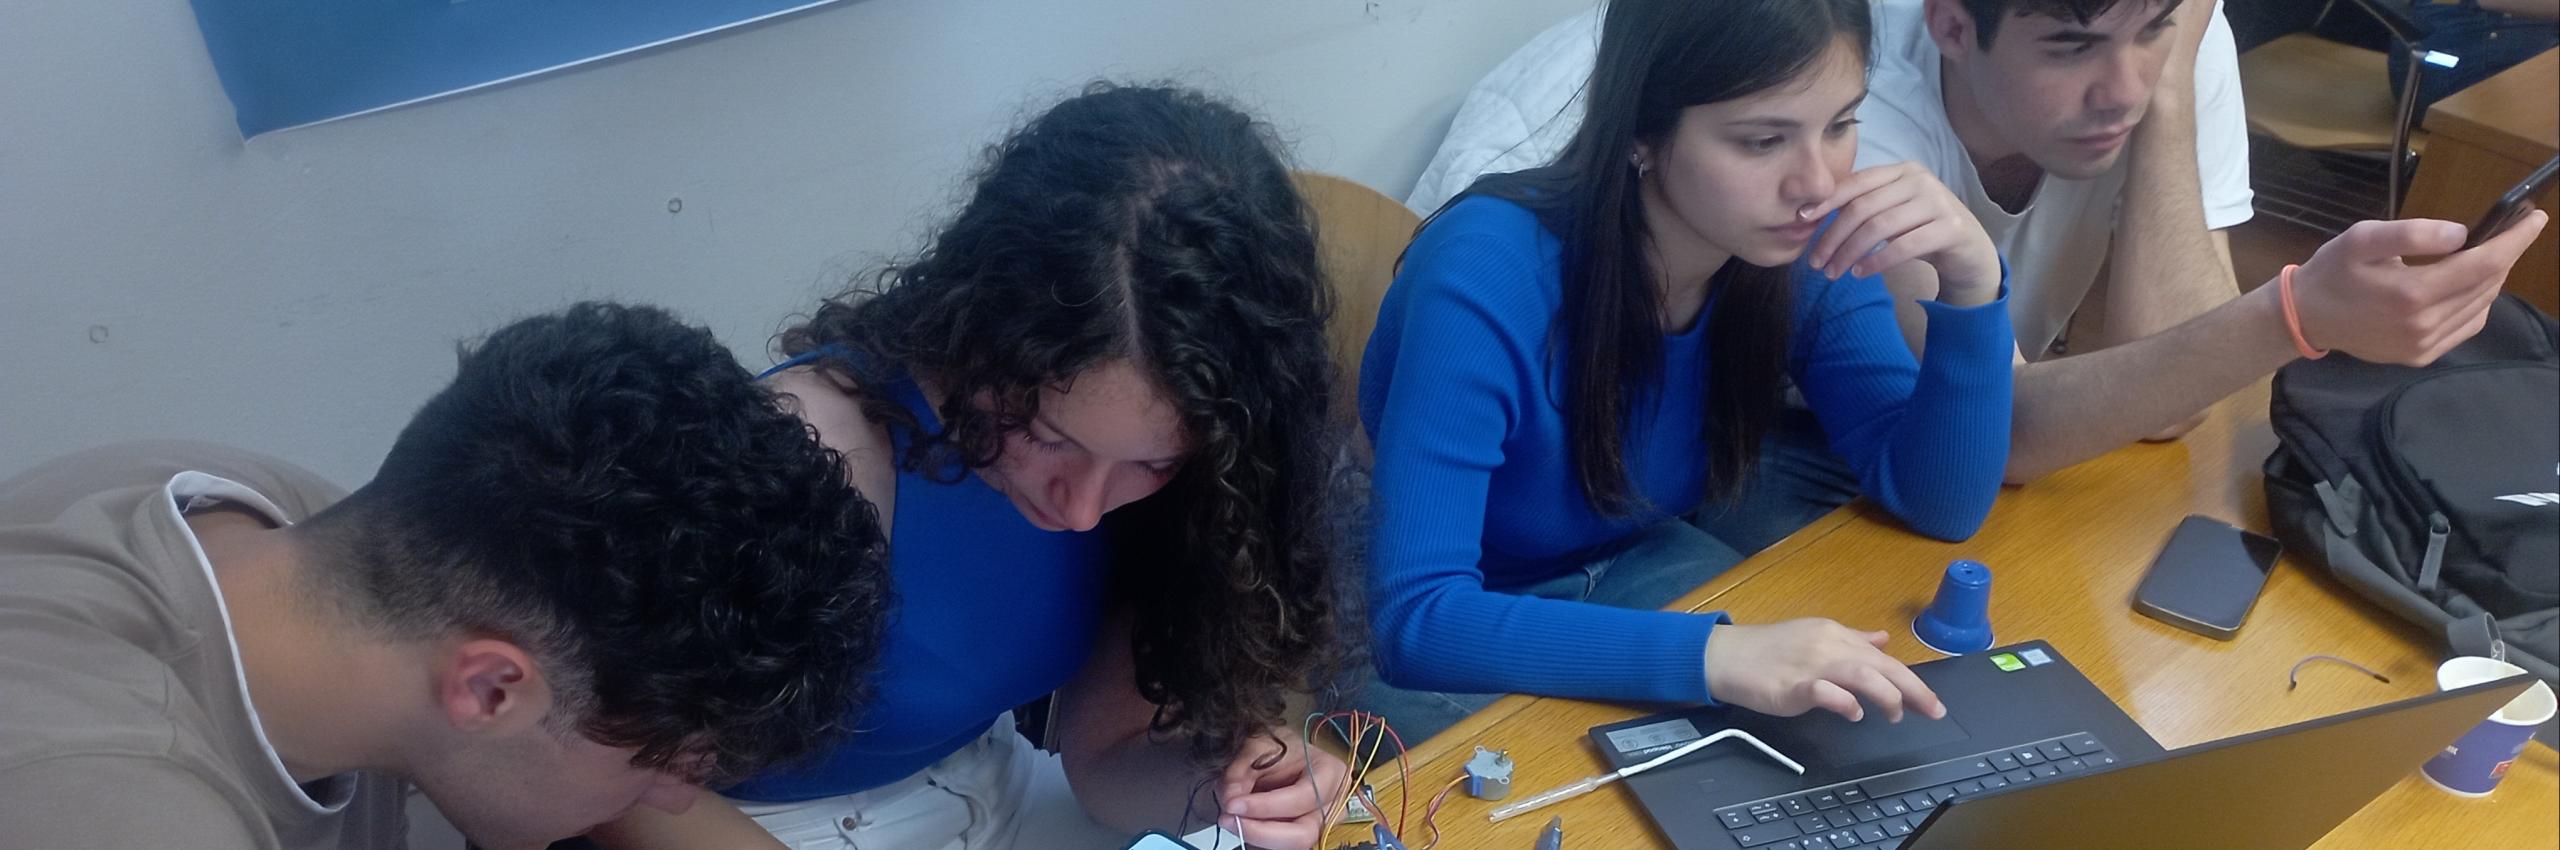 Hackathon Coding Girls a Palermo